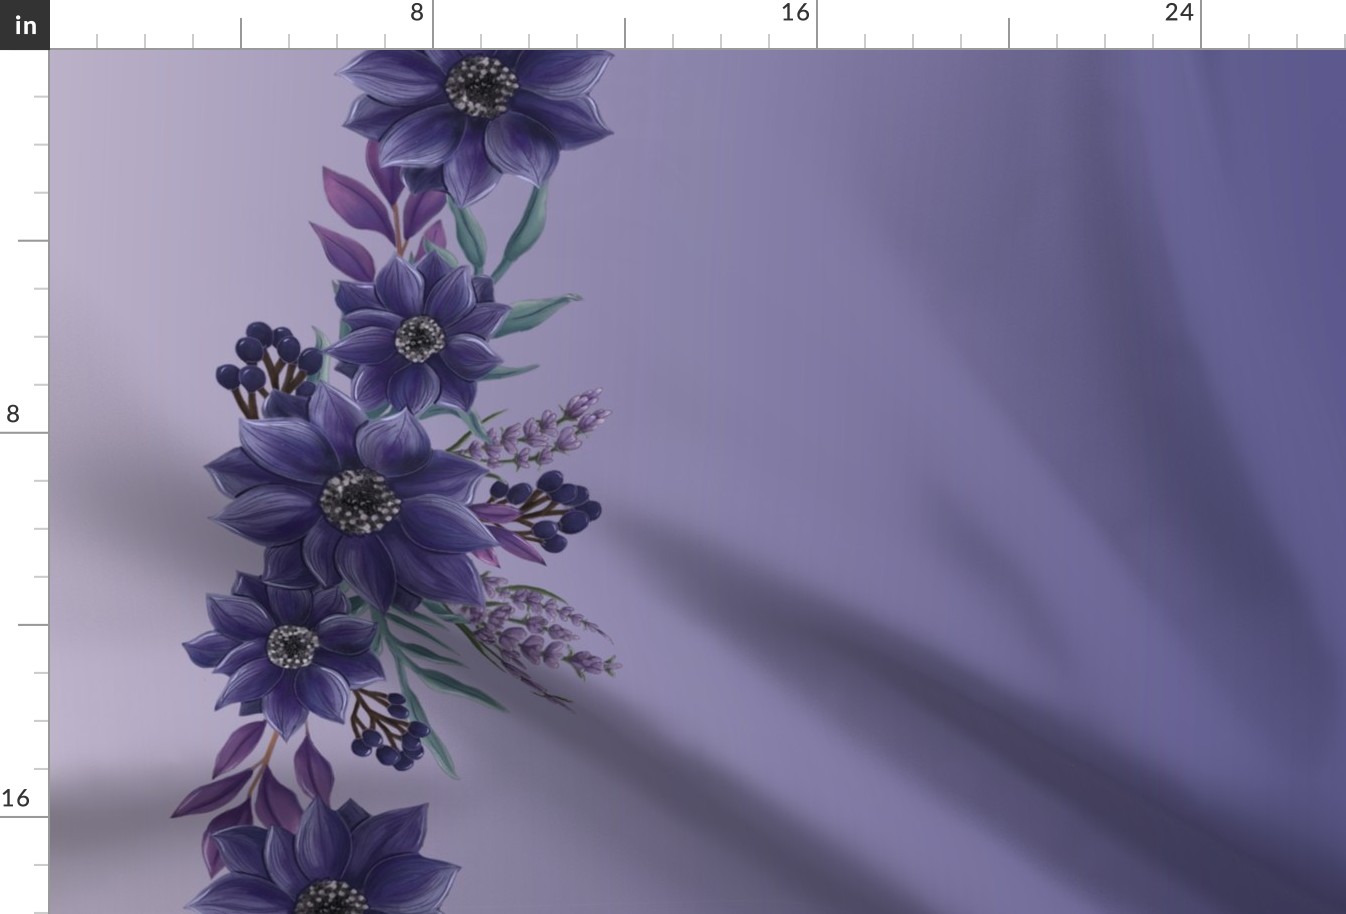 Purple Floral Border Print with Ombré Background